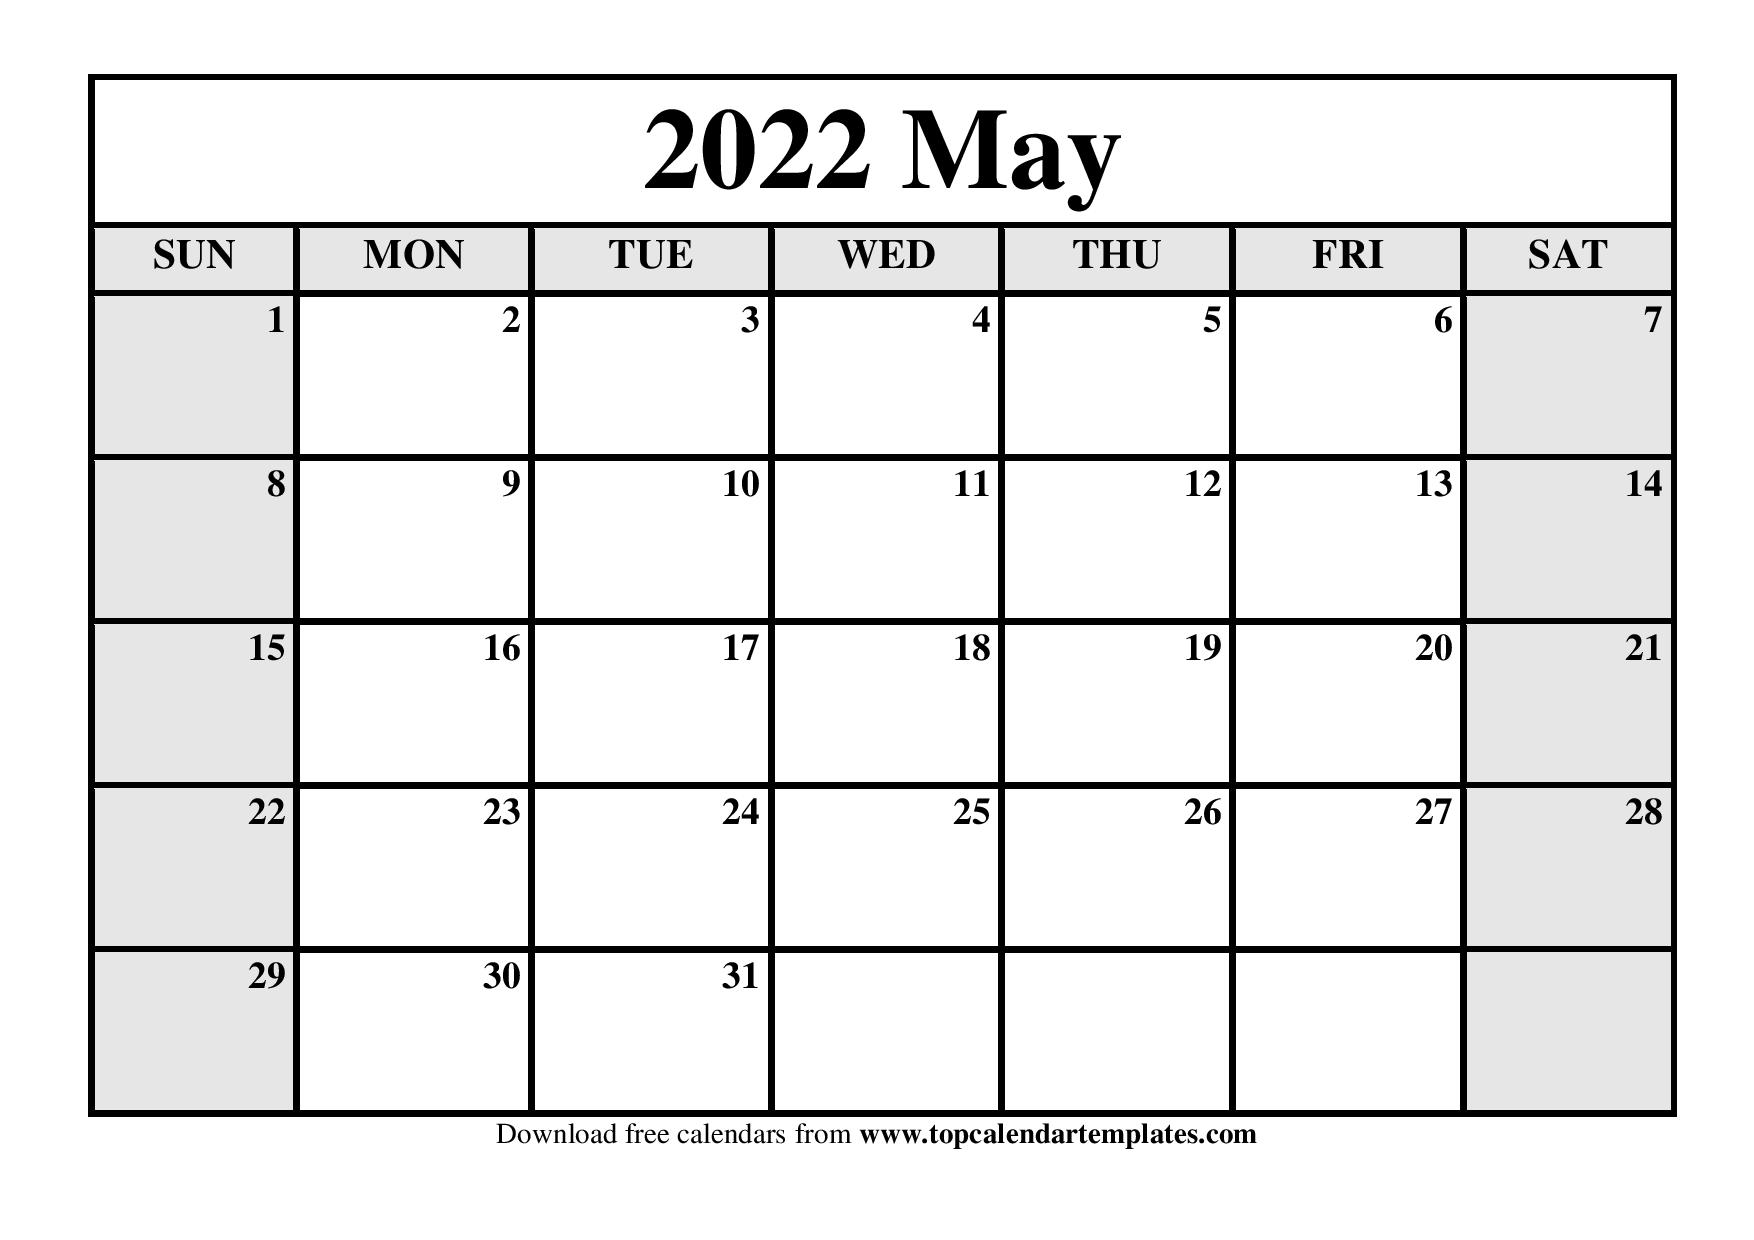 May 2022 Blank Calendar Printable Calendar May 2022 Templates - Pdf, Word, Excel